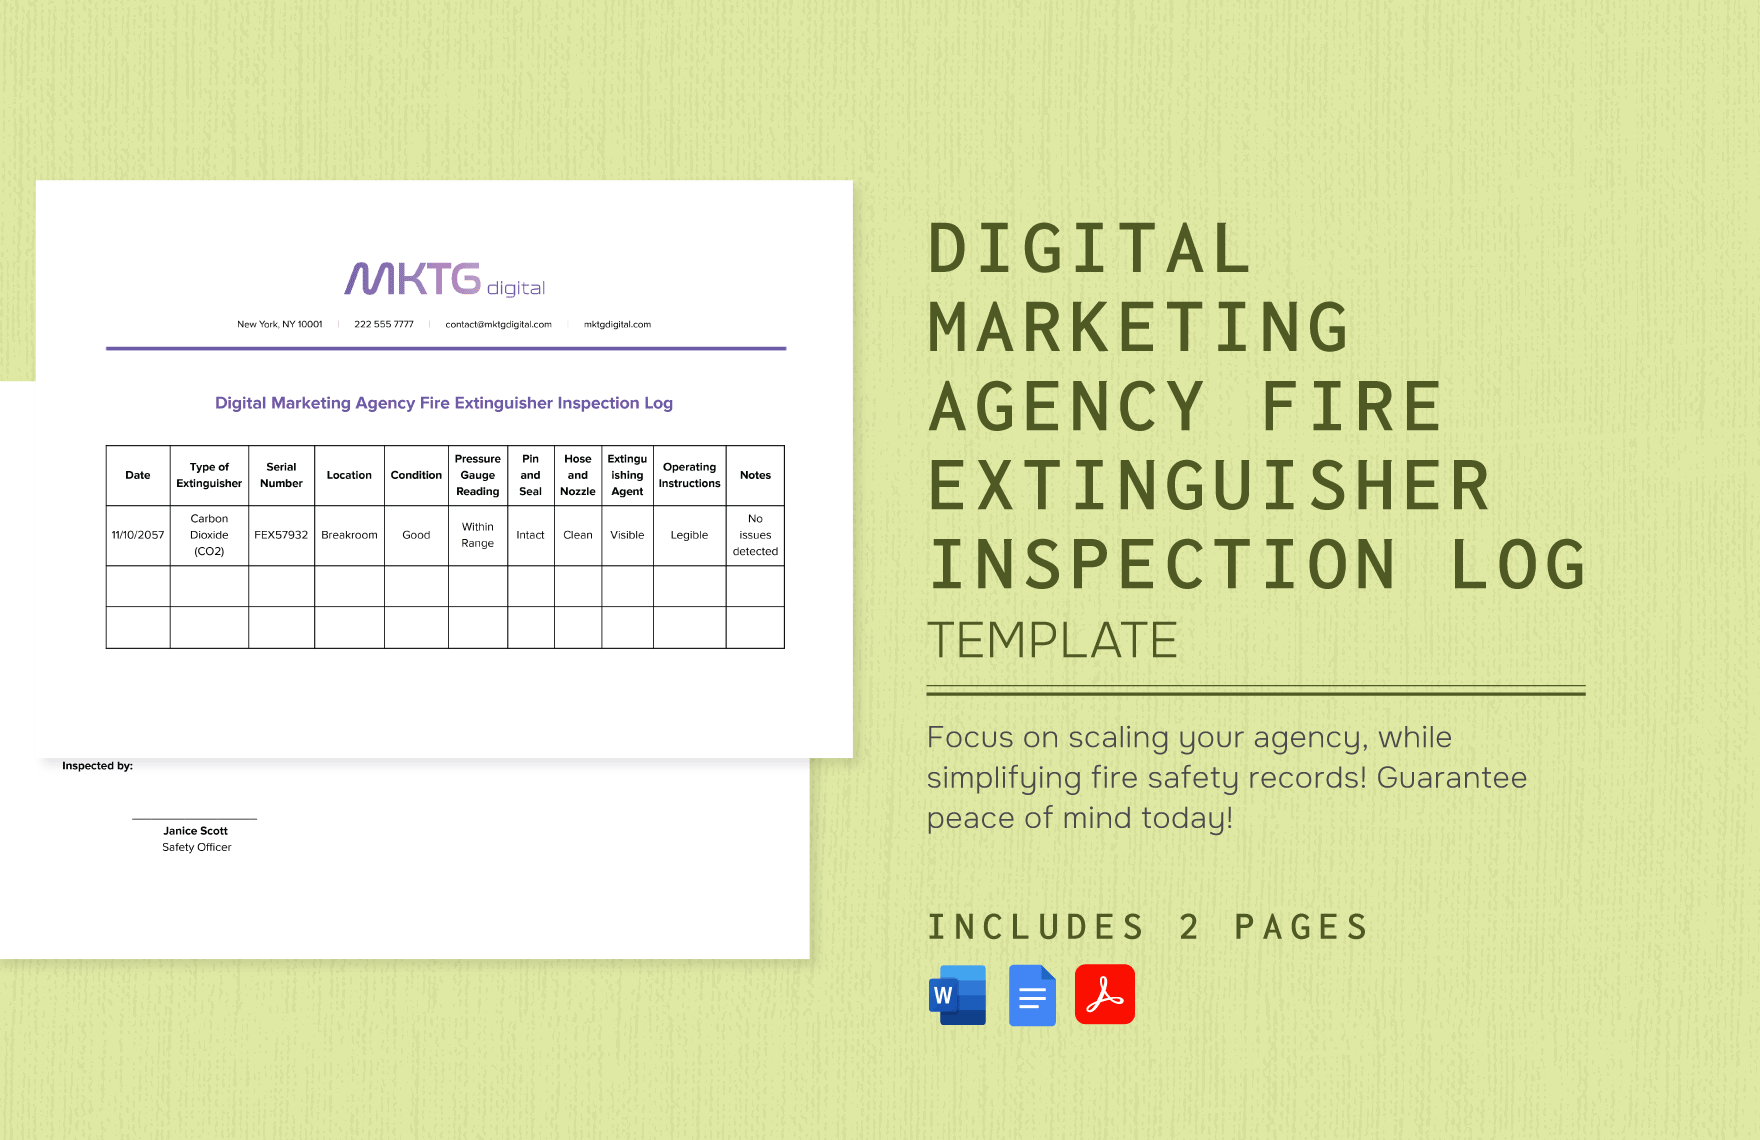 Digital Marketing Agency Fire Extinguisher Inspection Log Template in Word, Google Docs, PDF